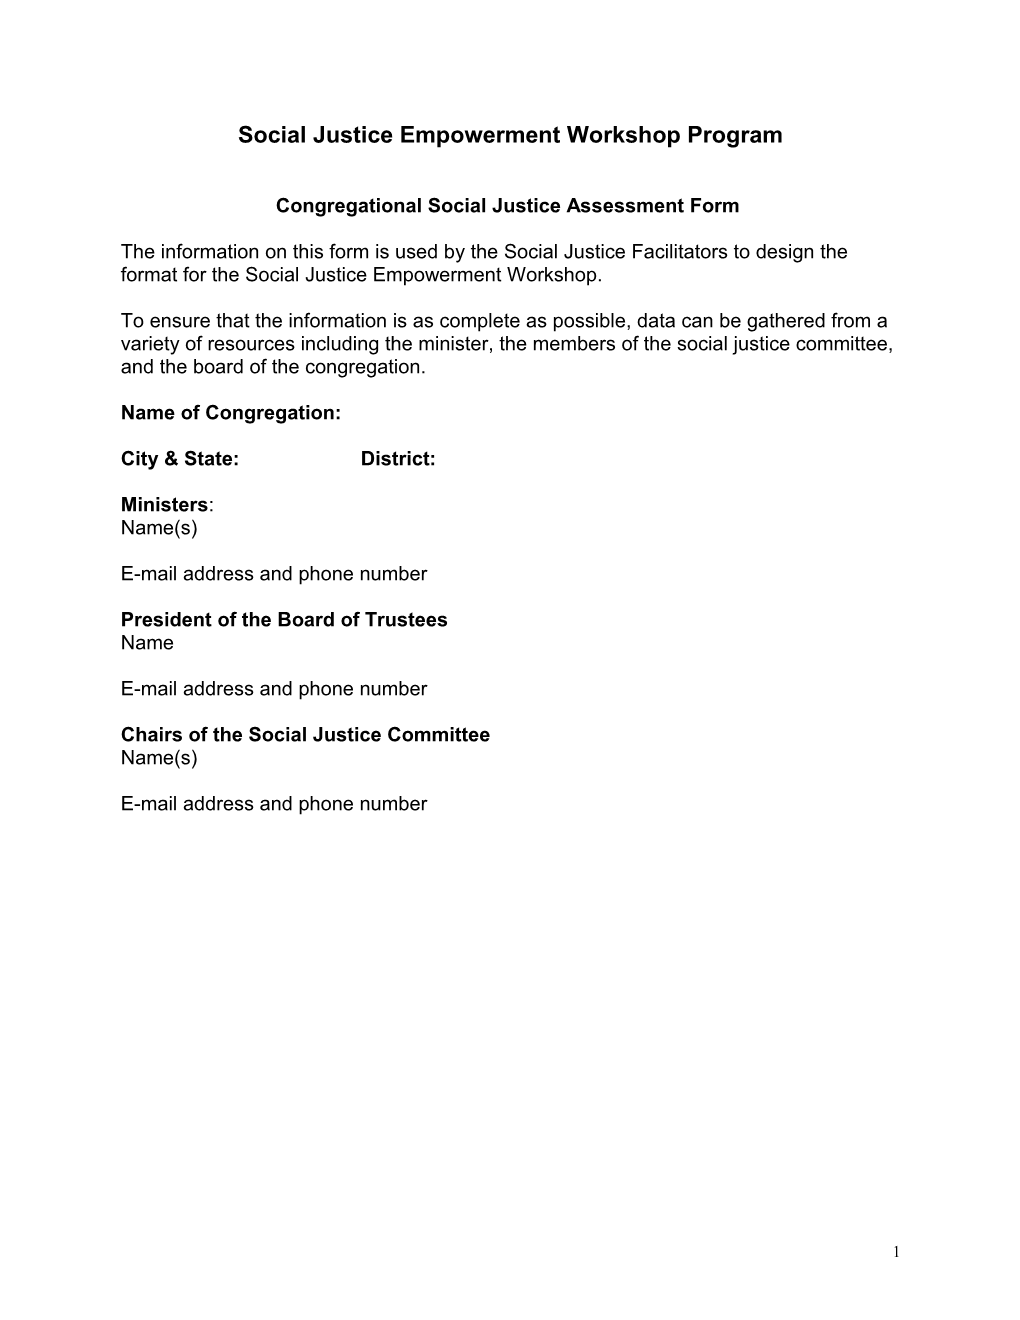 Evalue Form for Congregational Evaluation Training